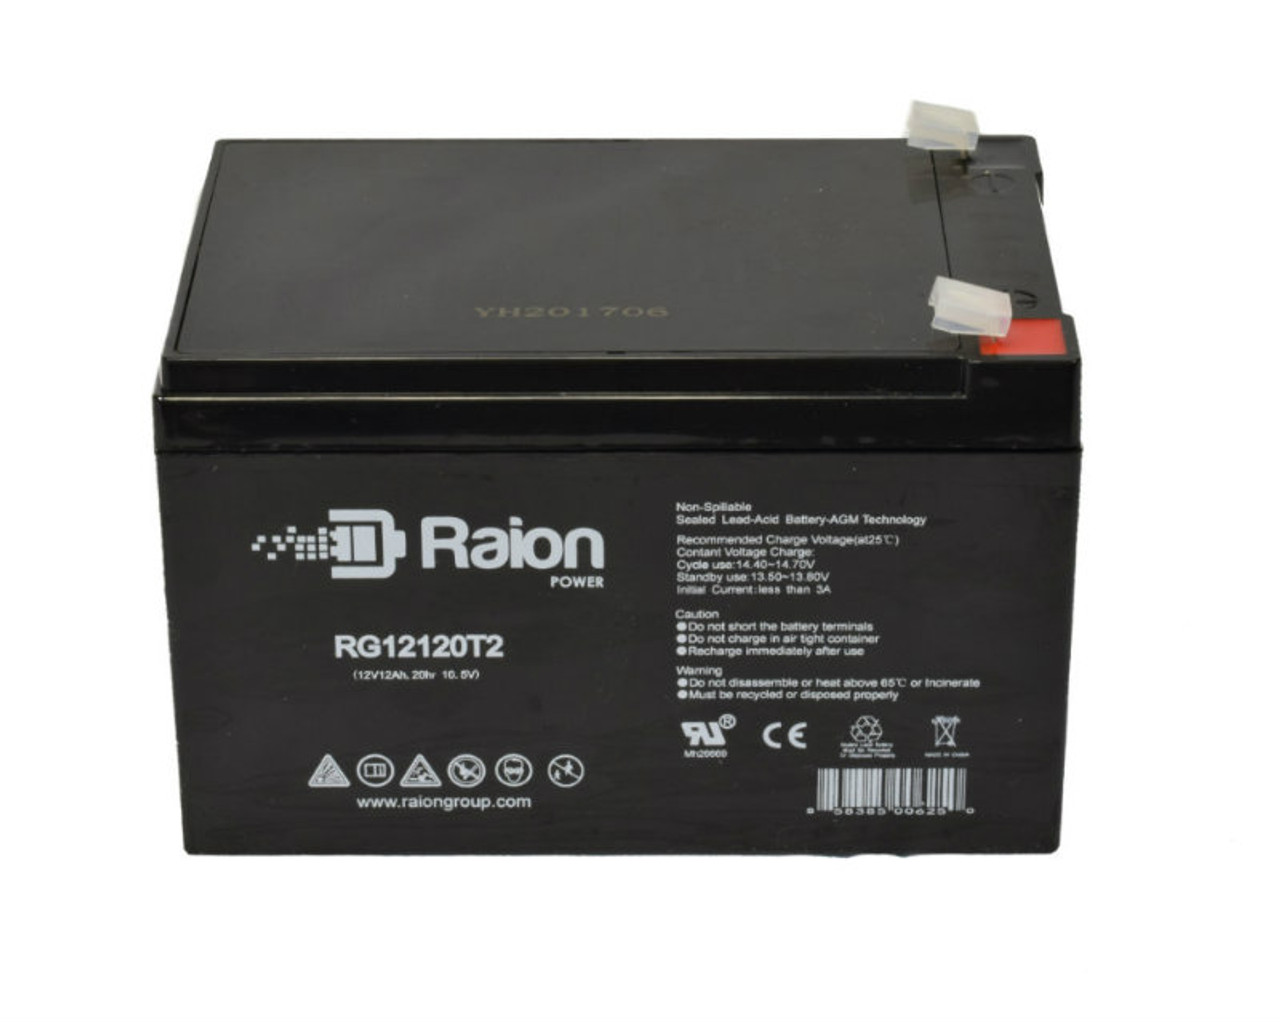 Raion Power RG12120T2 SLA Battery for Power Wheels Jeep (method 2)